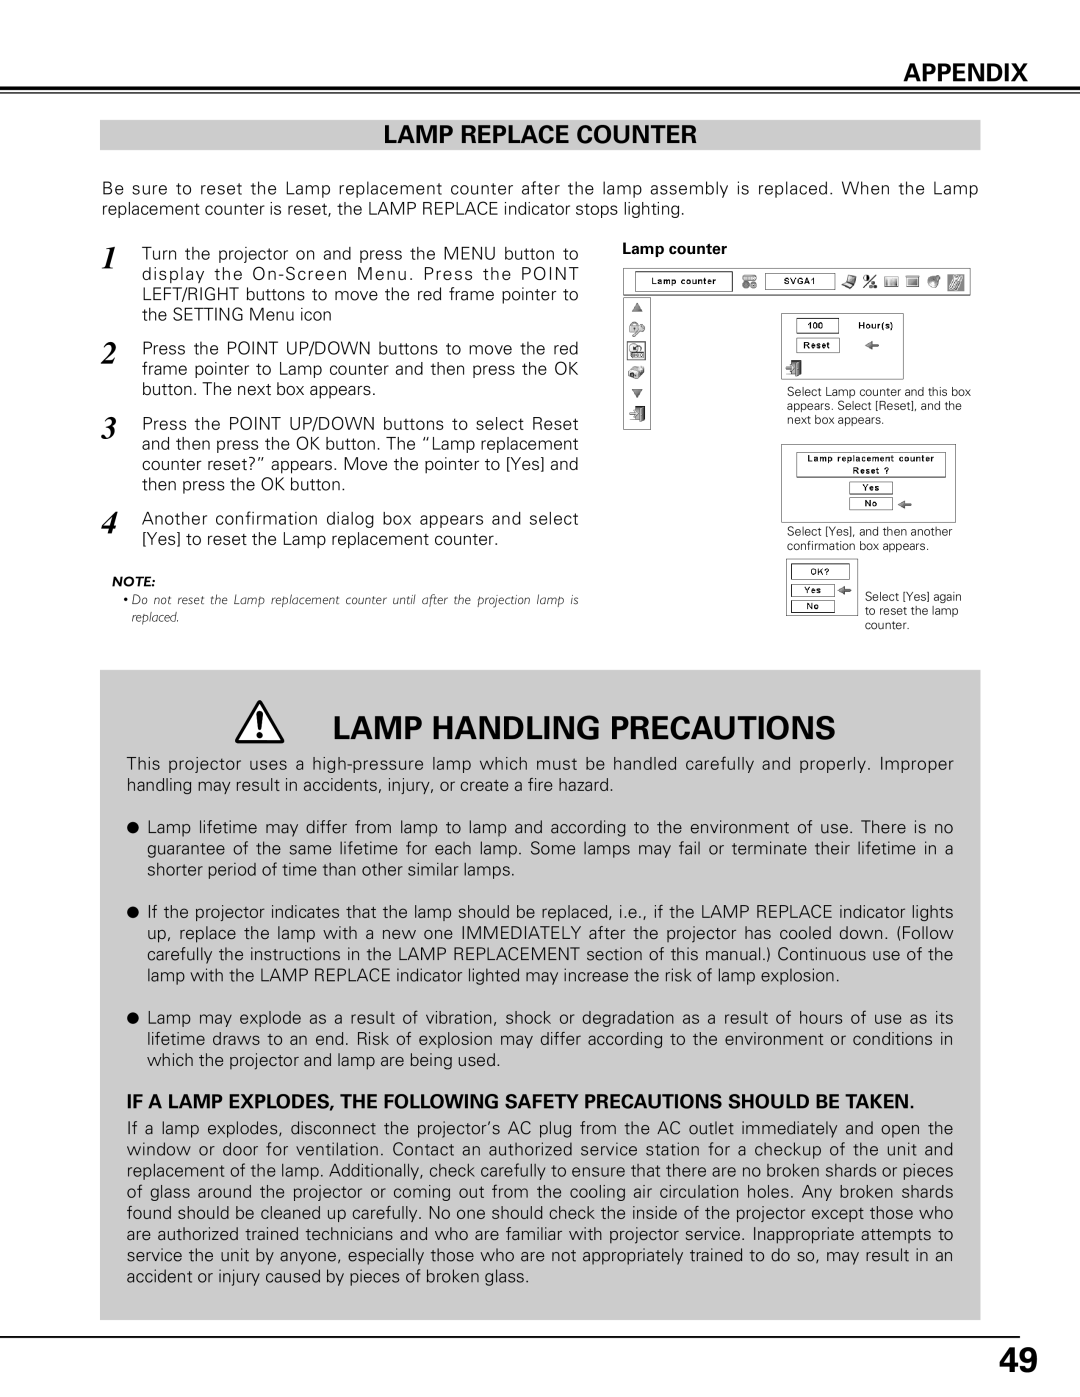 Canon LV-7575 user manual Appendix Lamp Replace Counter, Lamp Handling Precautions 